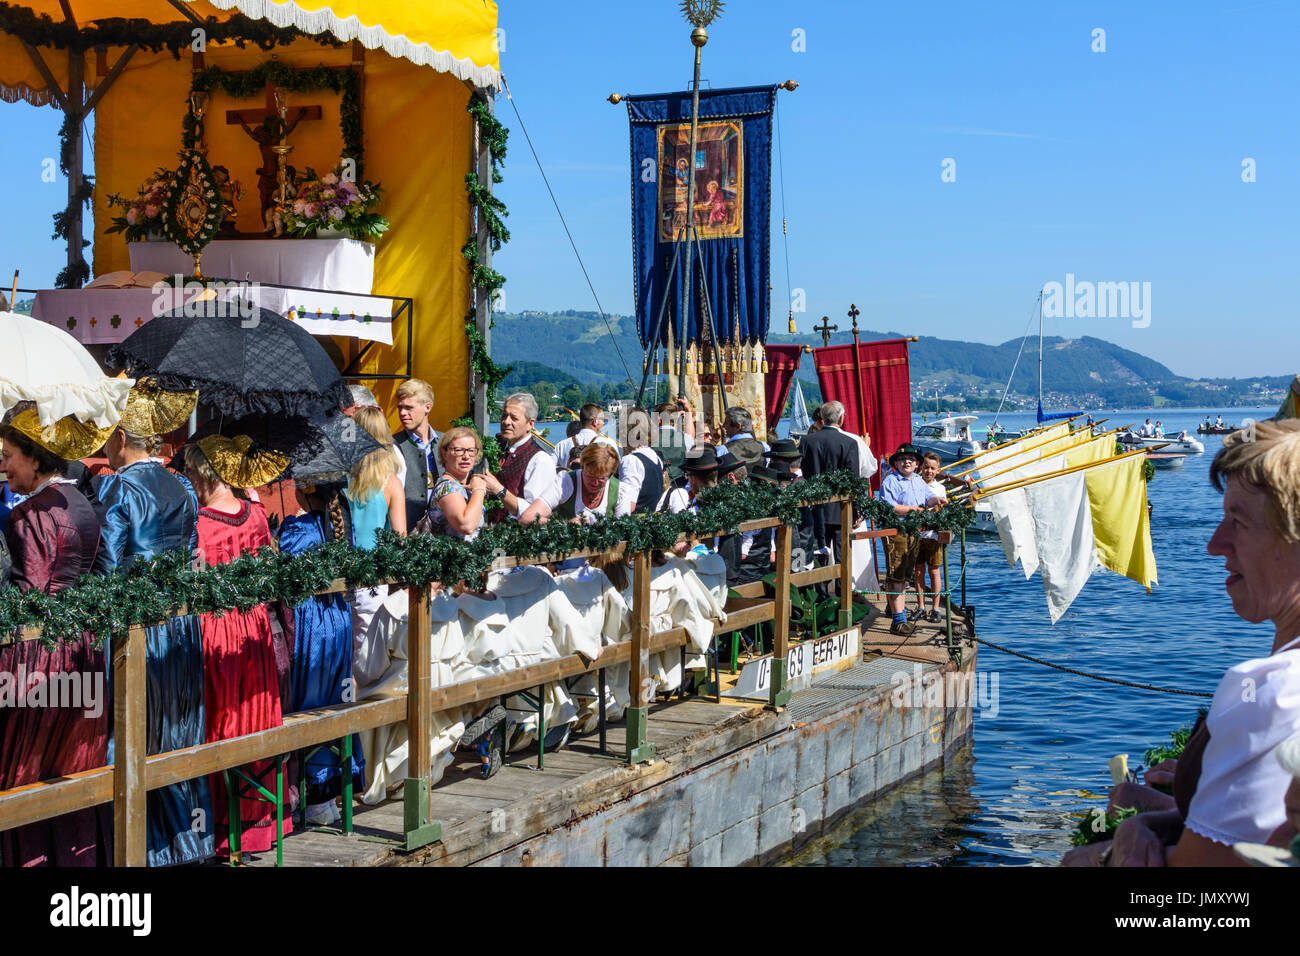 Maritime processione sul lago Traunsee presso il Corpus Christi holiday, nave, donna donne con Goldhaube Goldhauben (golden cap caps), chiesa bandiere, Traunkirc Foto Stock